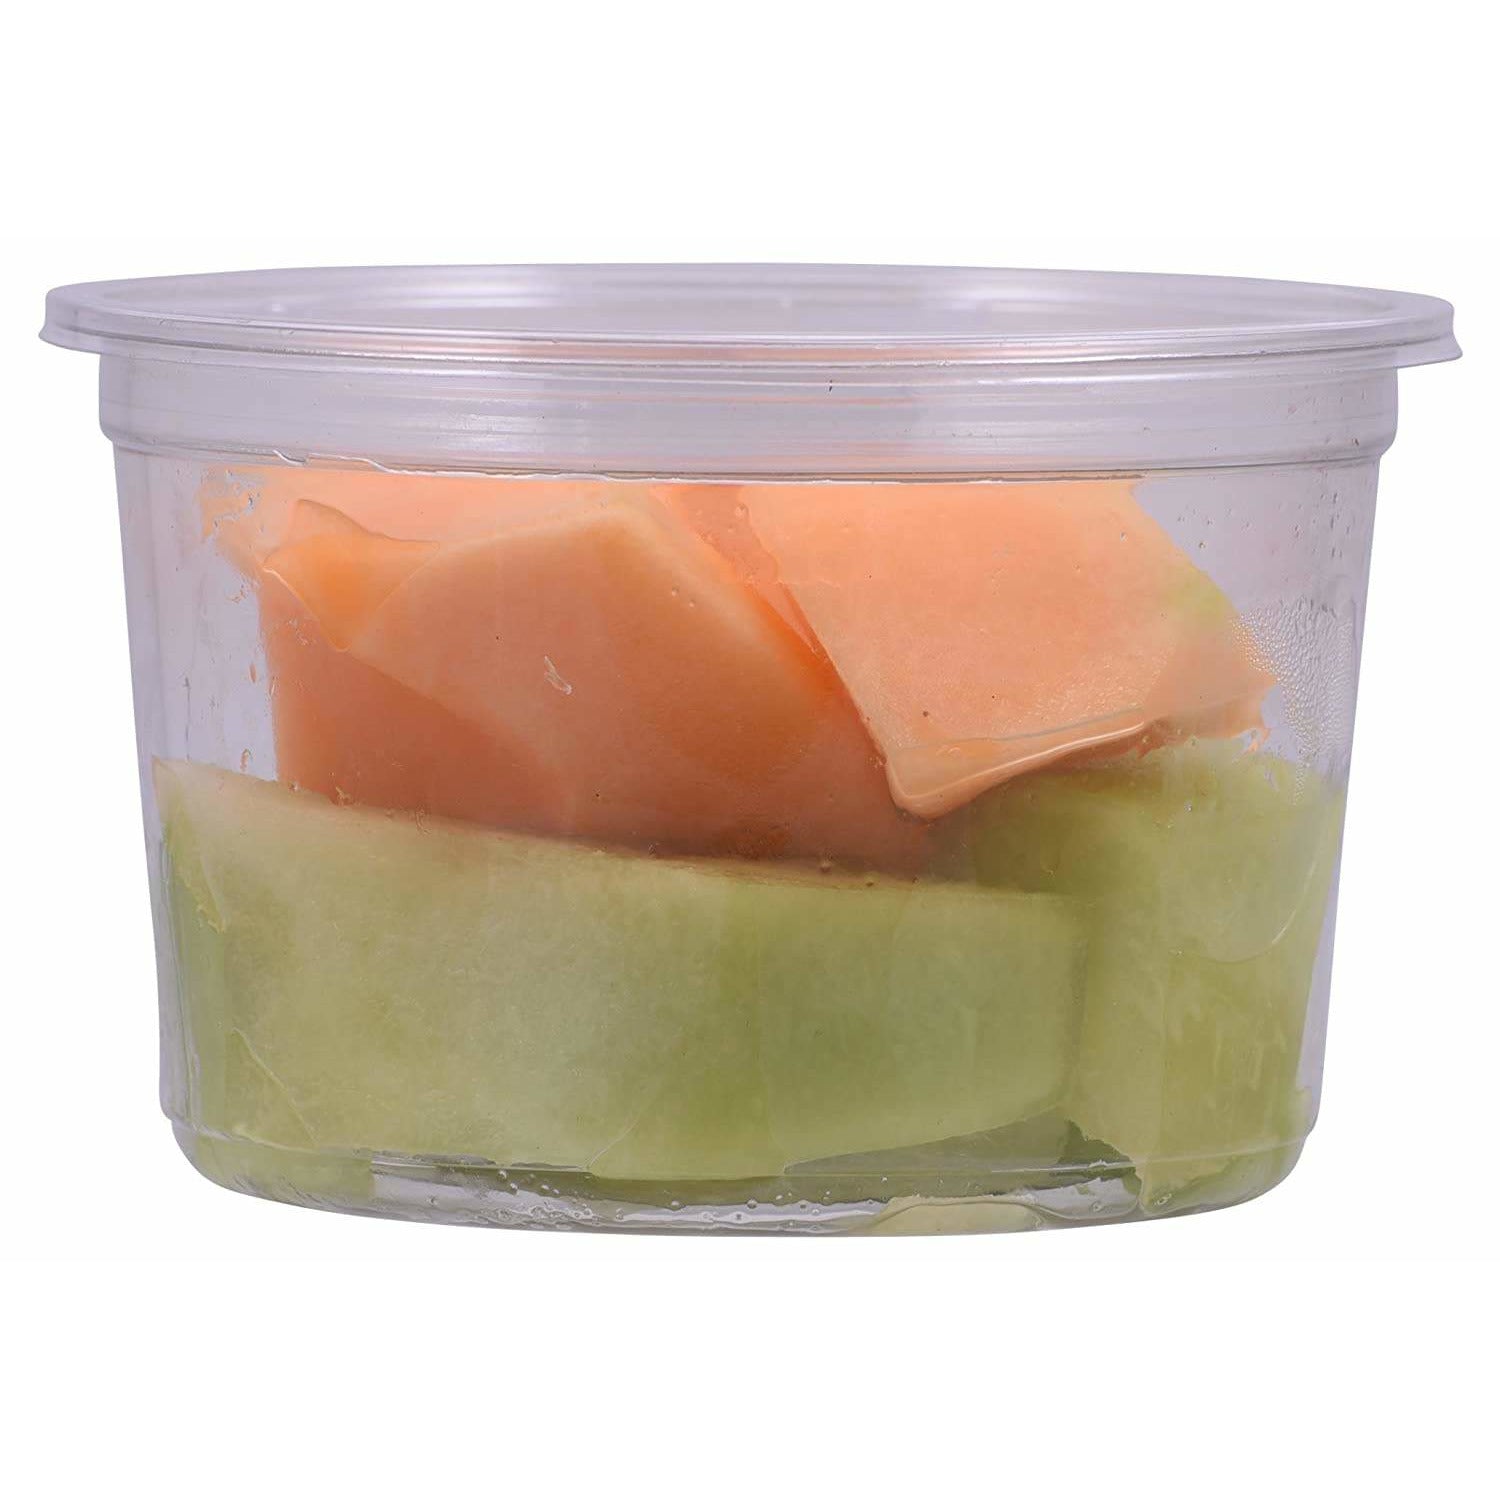 Mixed Fruit Salad Cantaloupe and Honeydew 2LB